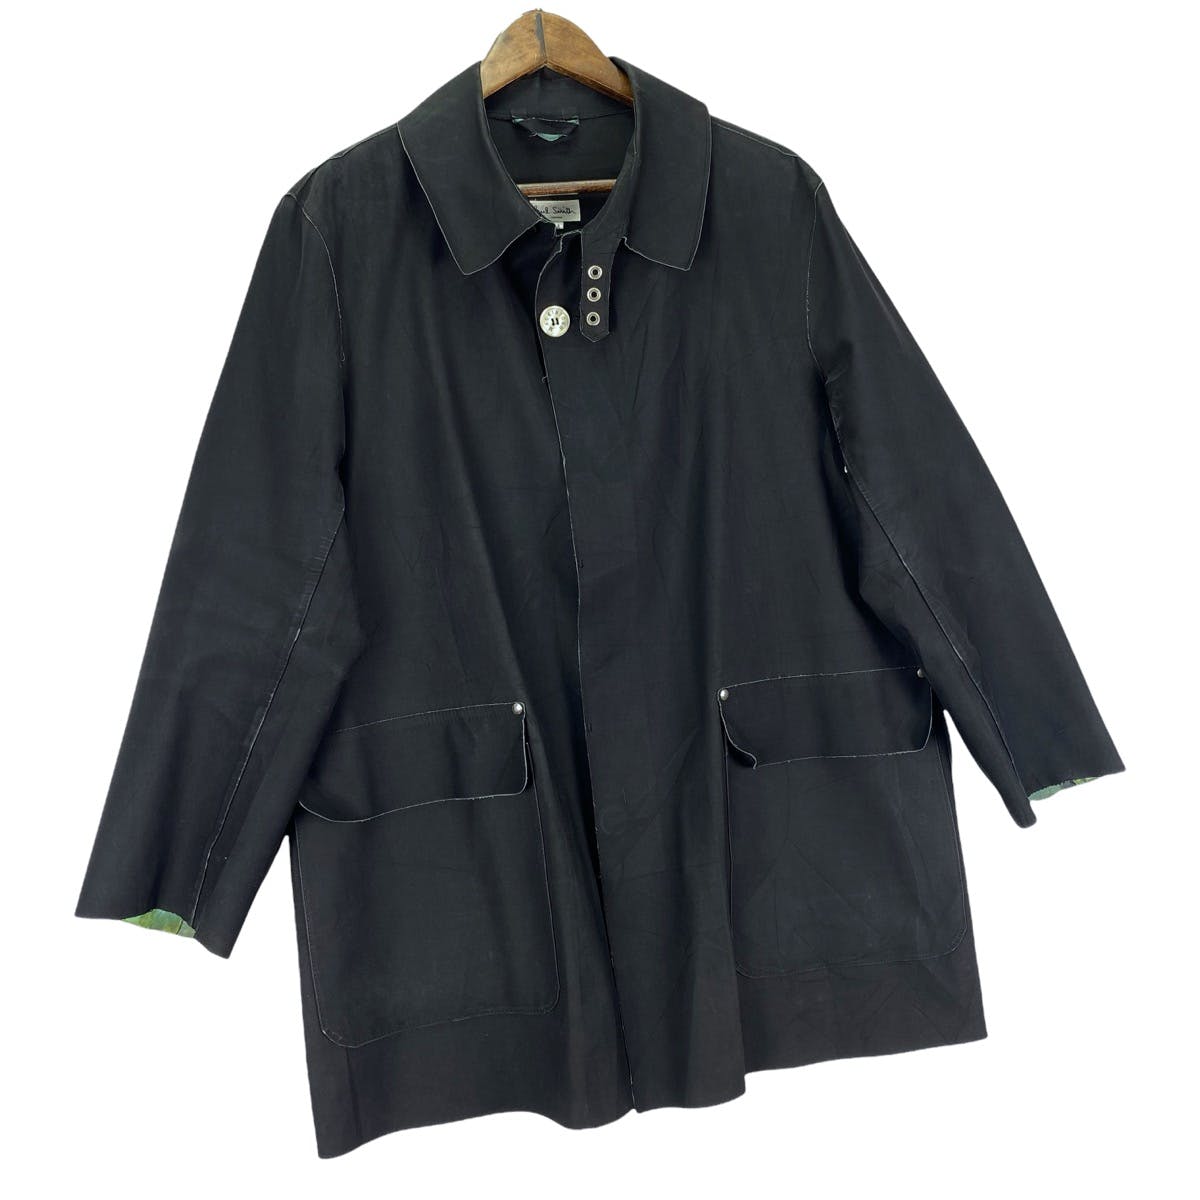 Mackintosh Paul Smith Trench Coat Jacket - 11